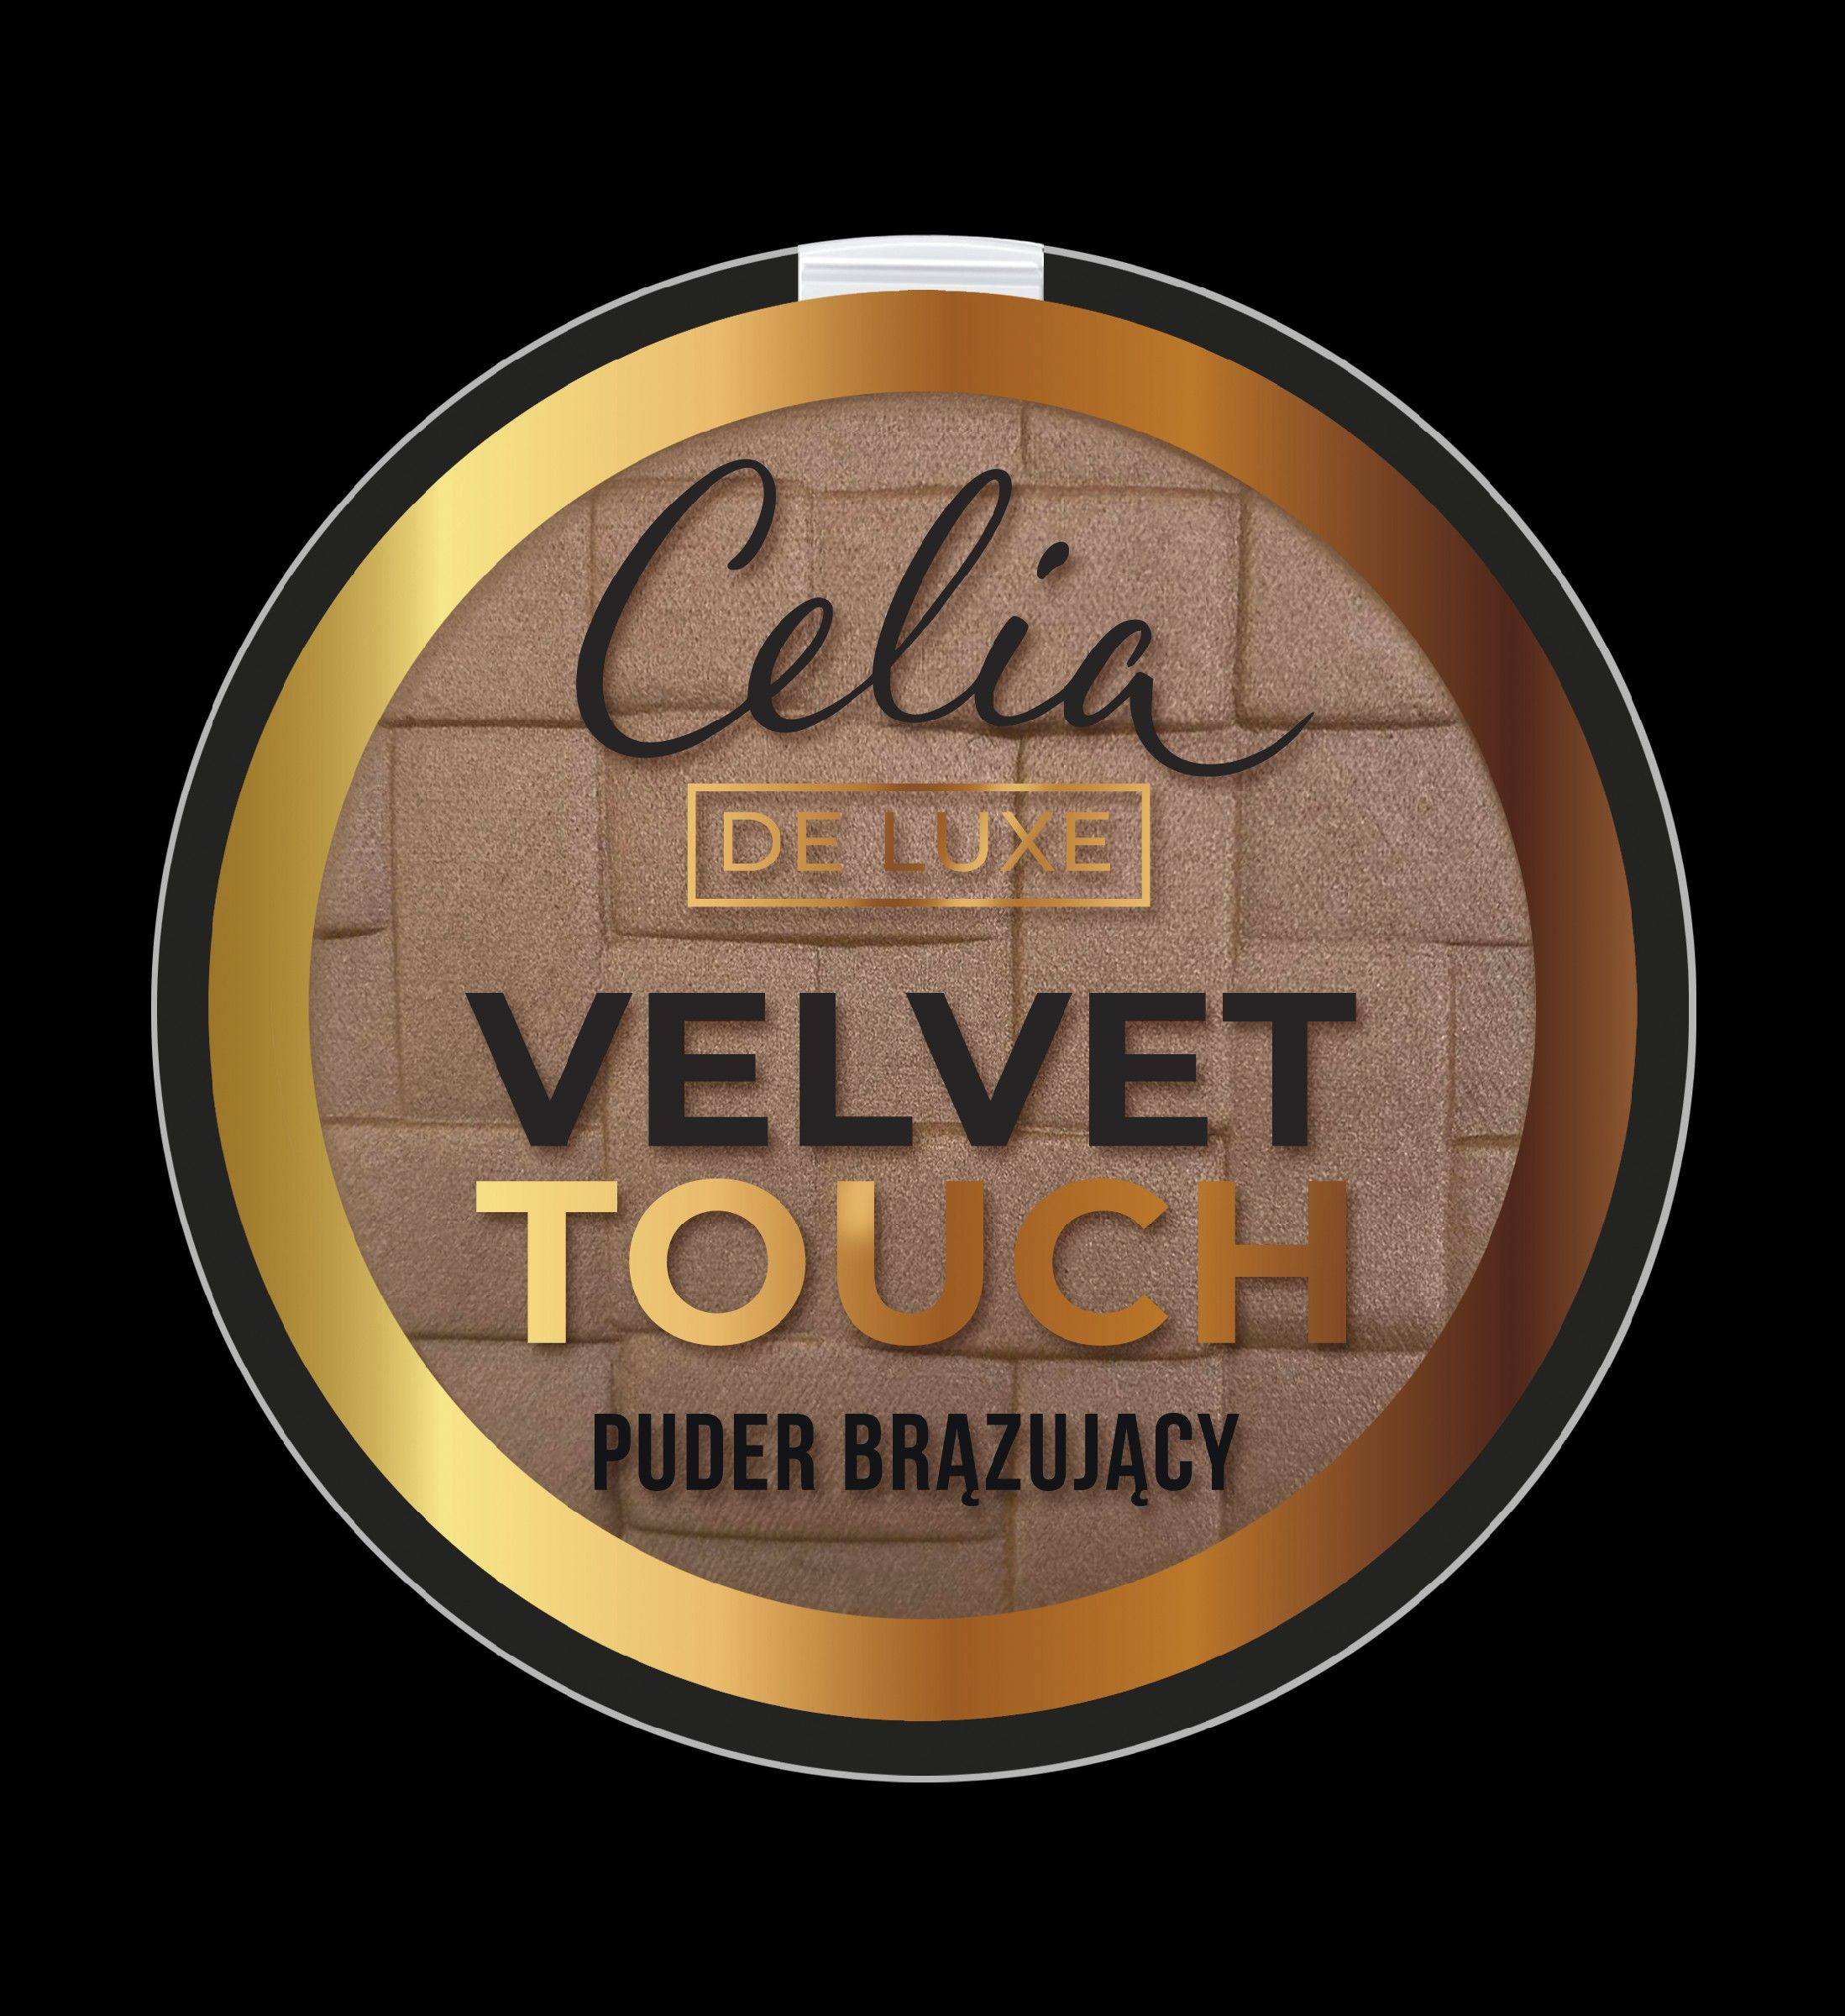 Celia Velvet Touch Puder w kamieniu nr. 105 9g 075124 (5900525065124)